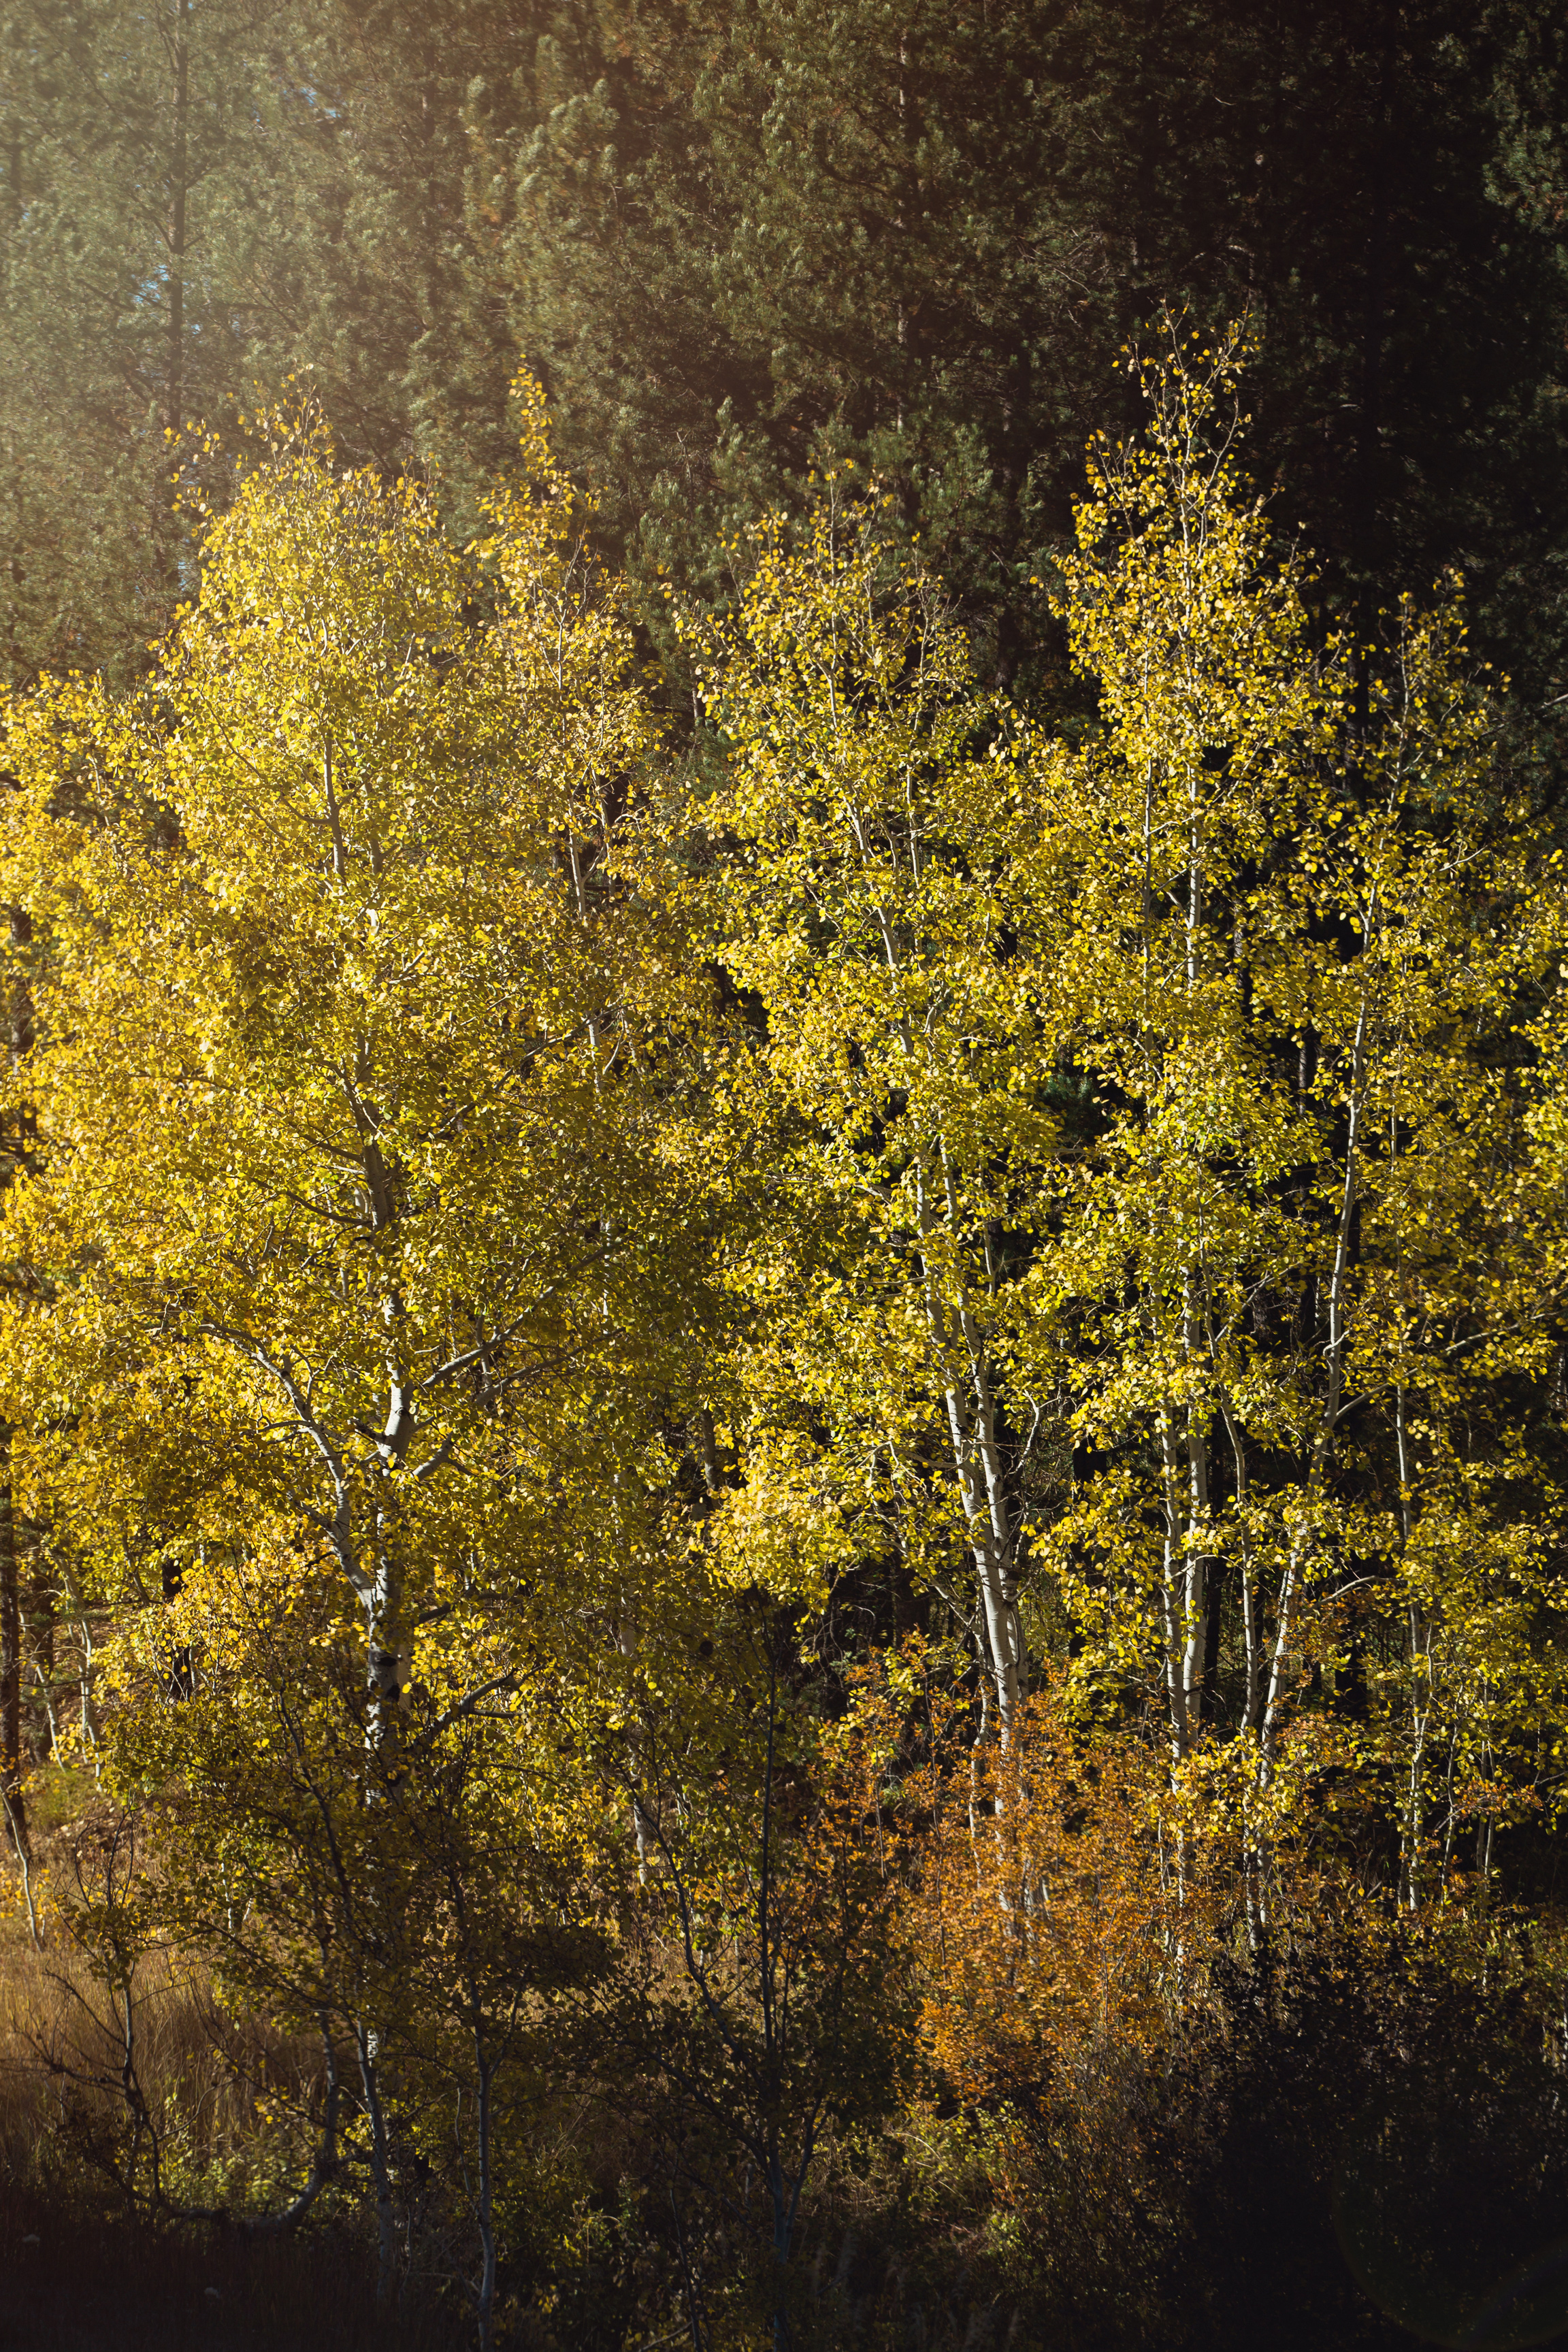 Cindy_Giovagnoli_Idaho_Wyoming_Grand_Teton_National_Park_autumn_aspens_camping_mountains-019.jpg